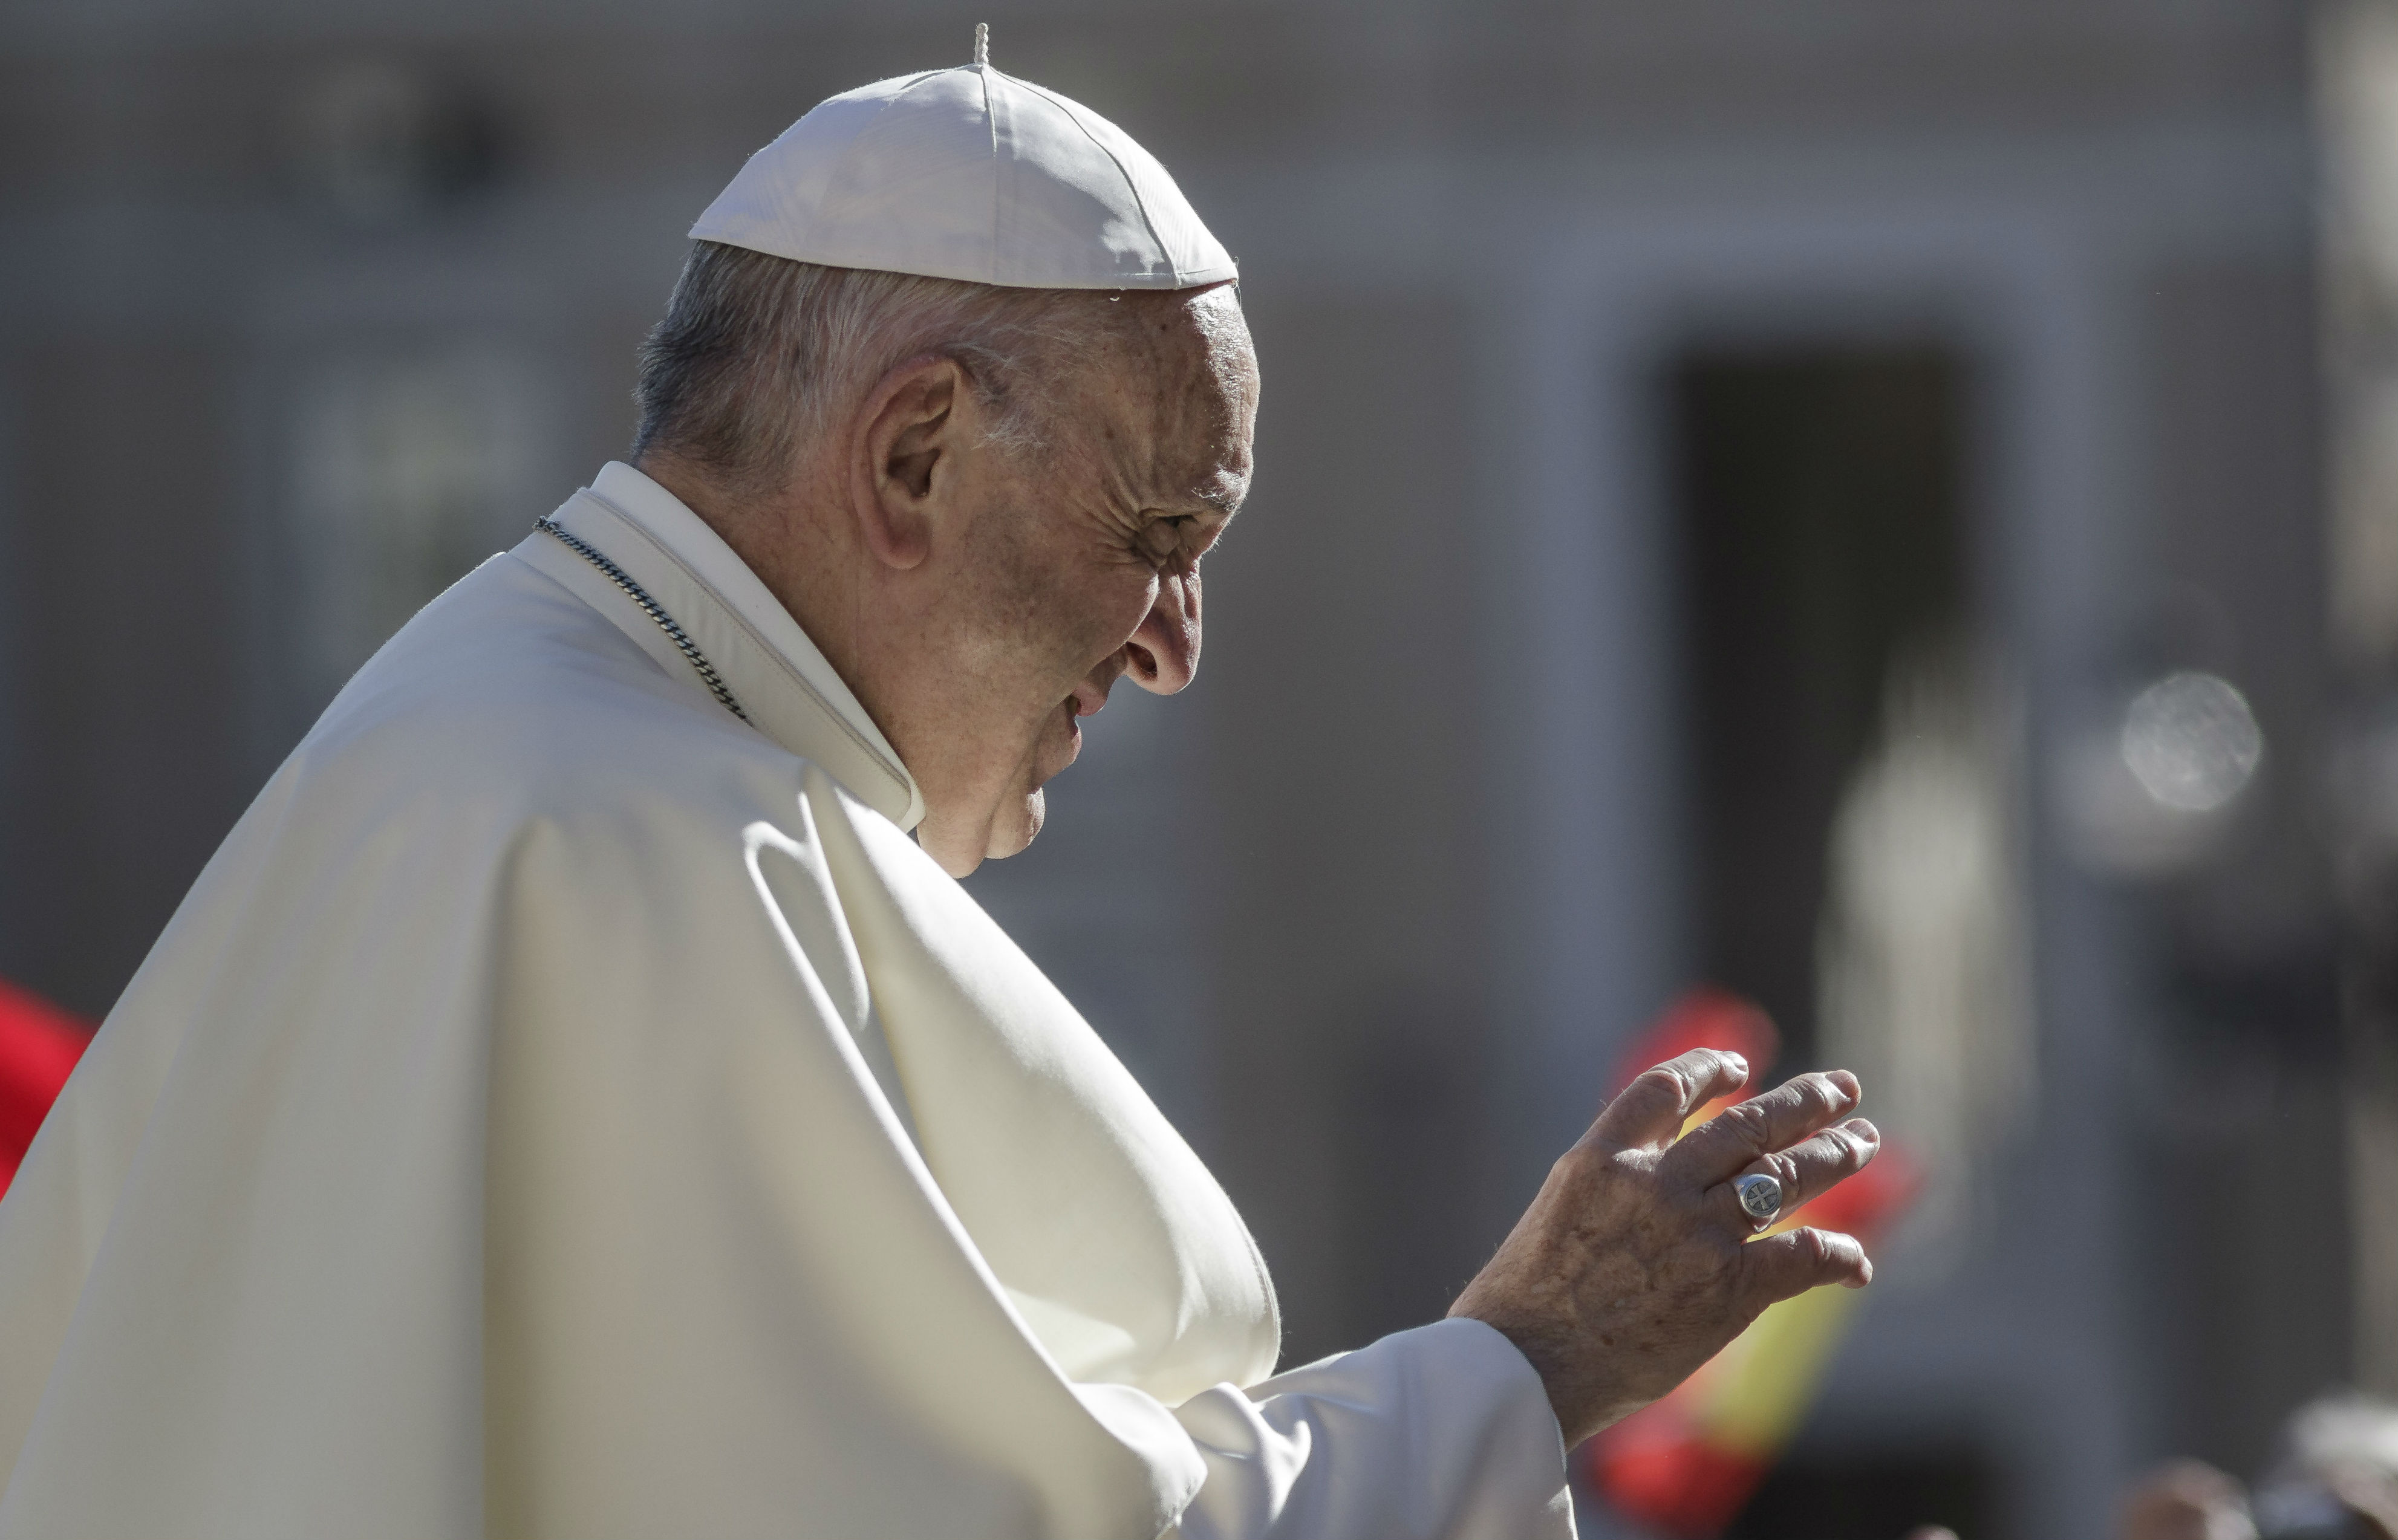 'Amoris Laetitia' is built on traditional Thomist morality, pope says